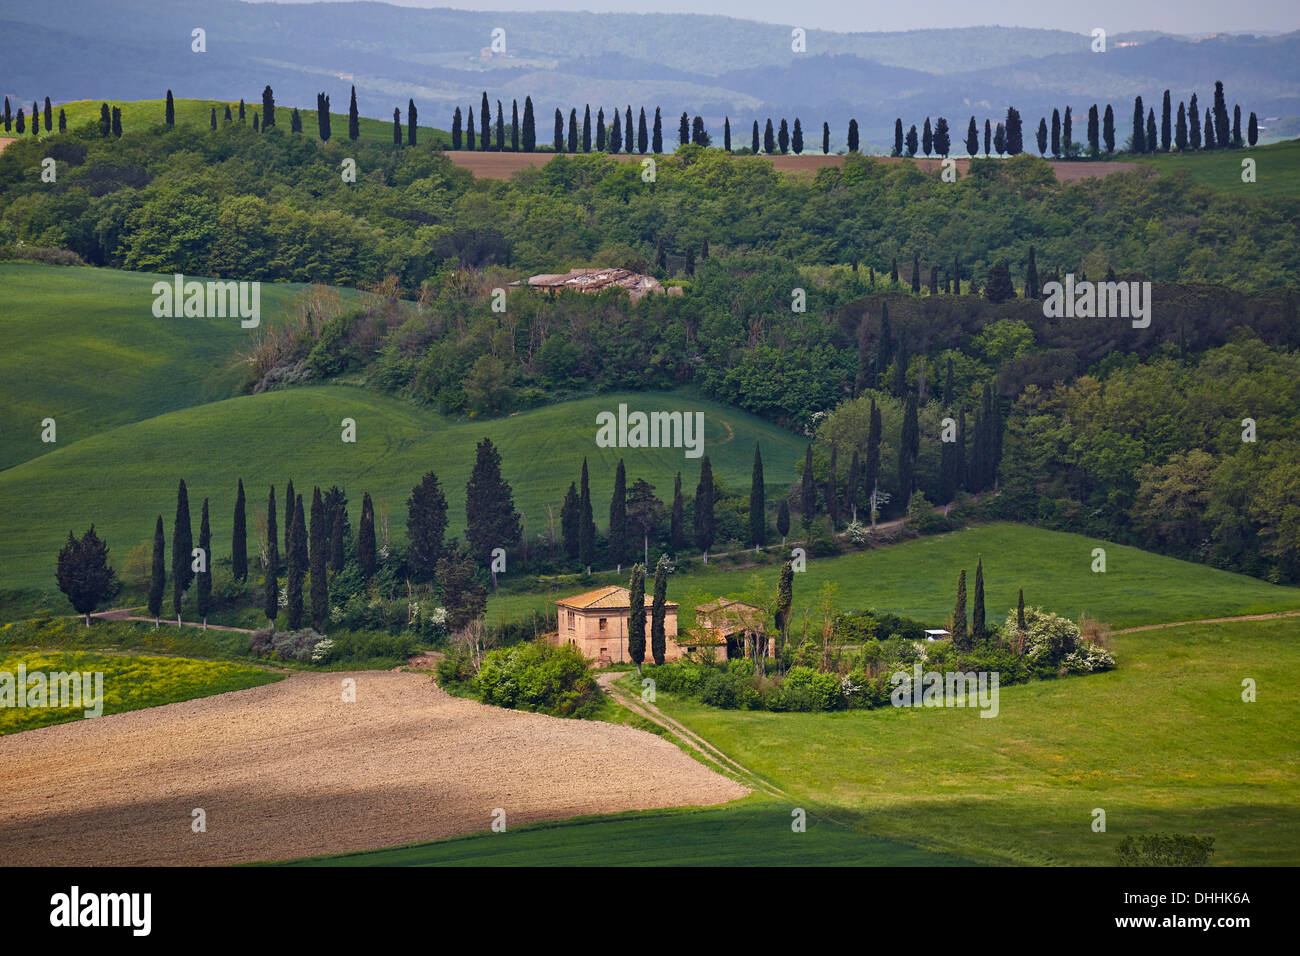 Hilly landscape of the Crete Senesi region, Moccia, Chiusure, Province of Siena, Tuscany, Italy Stock Photo